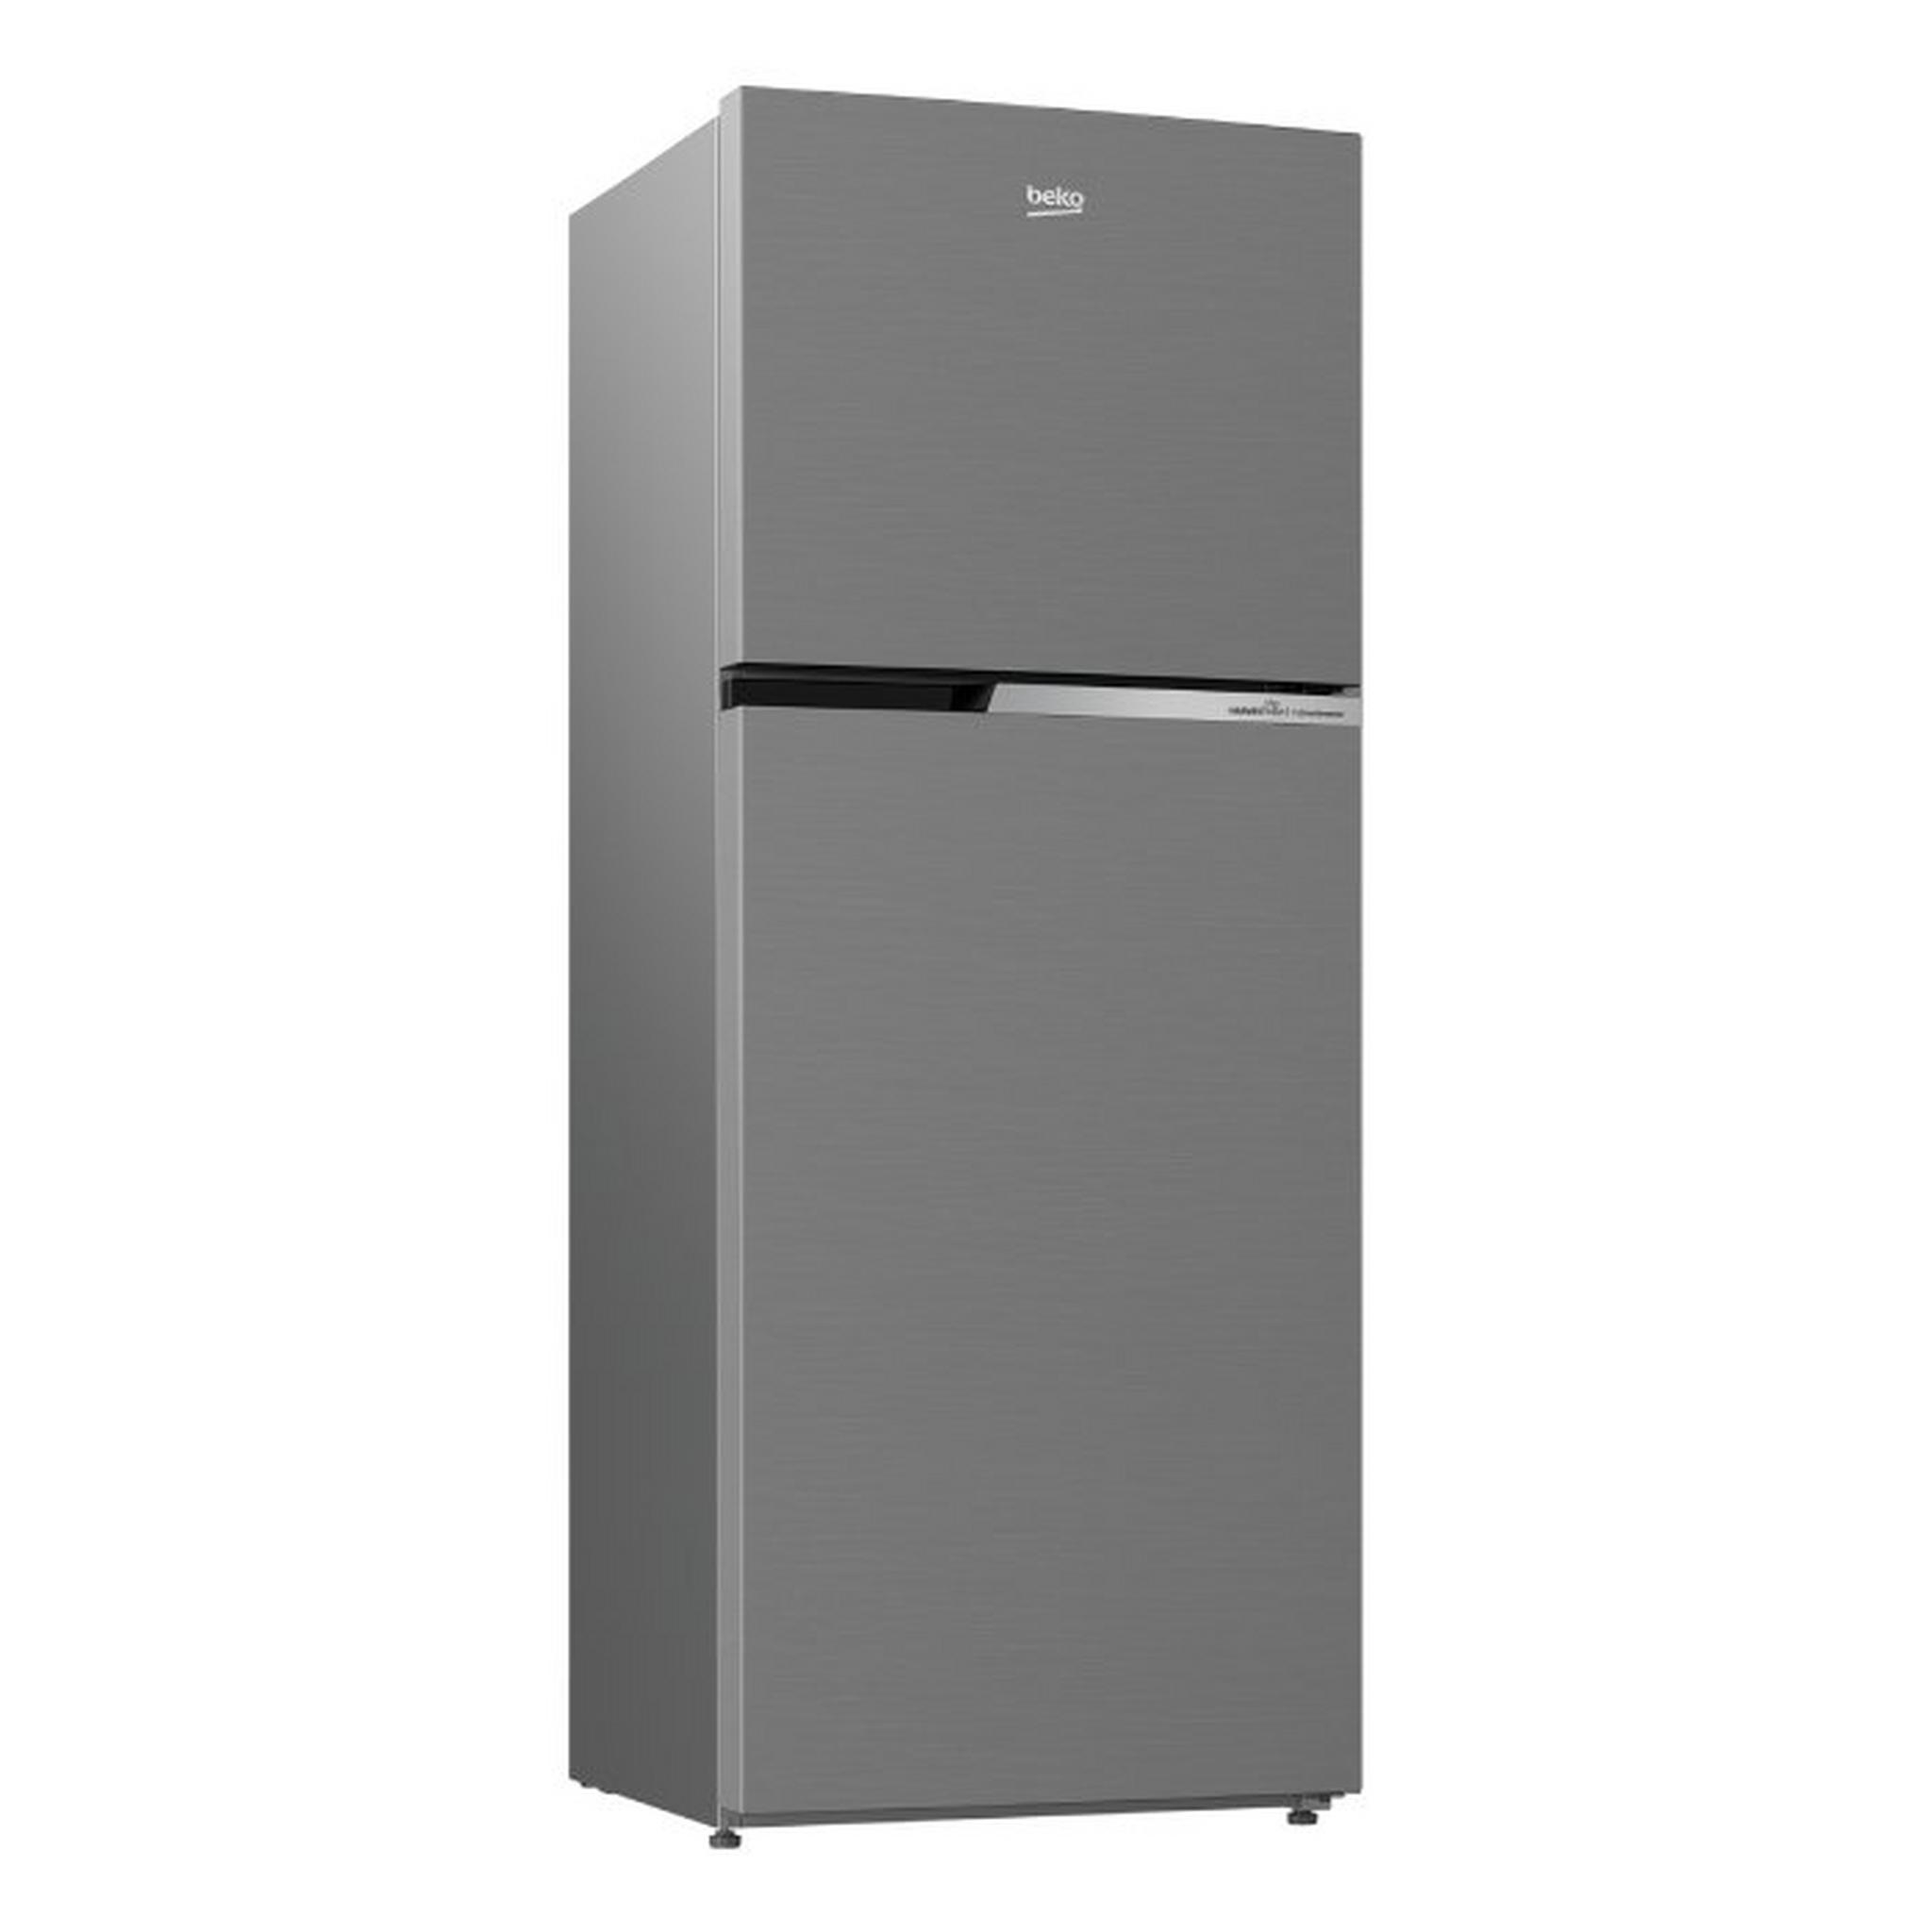 Beko Top Mount Refrigerator, 14.4CFT, 409-Liters, RDNT401XS - Silver